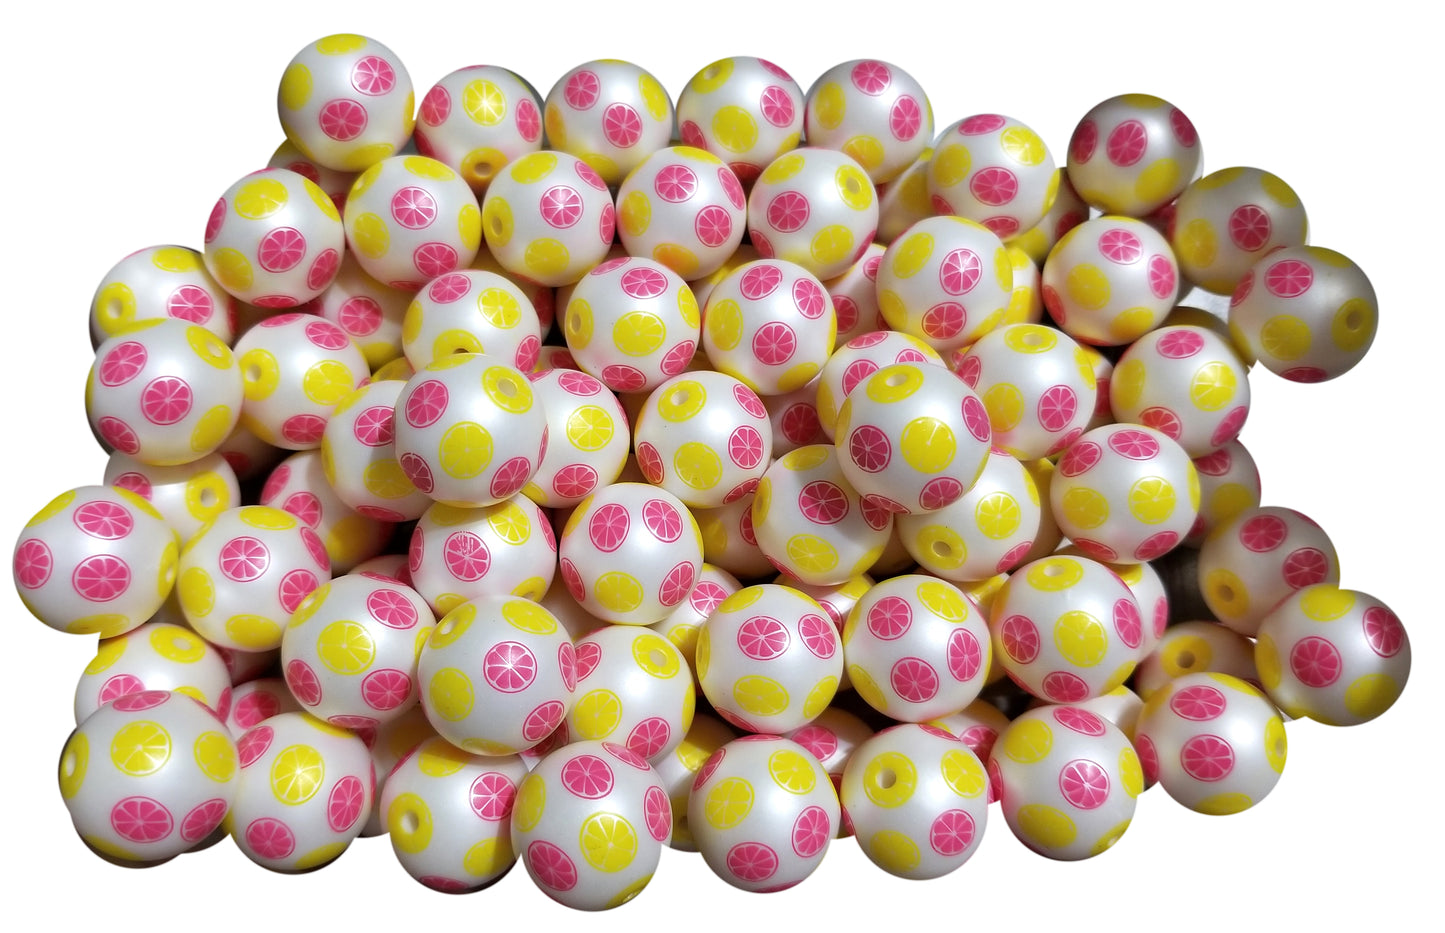 lemons & grapefruits 20mm printed bubblegum beads